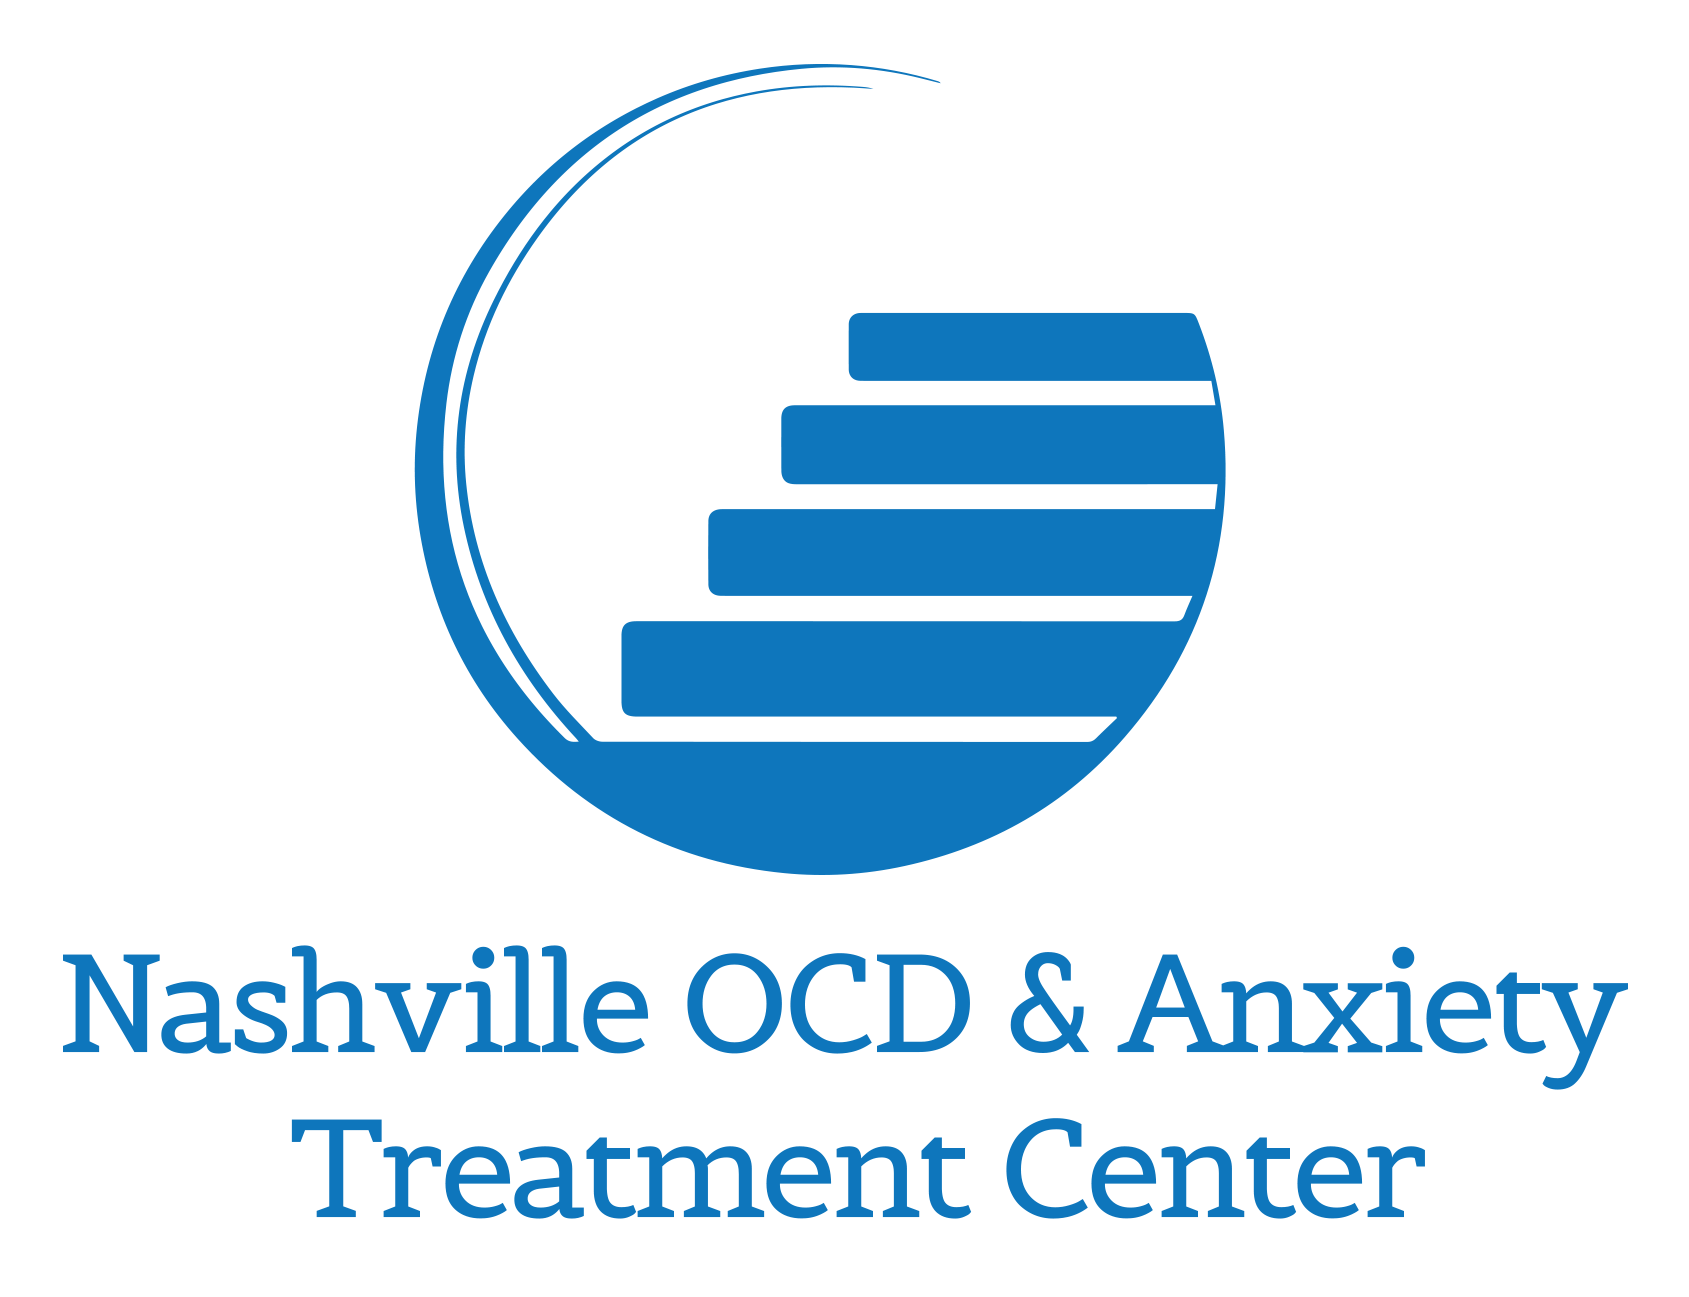 Nashville OCD & Anxiety Treatment Center - Institutional Member